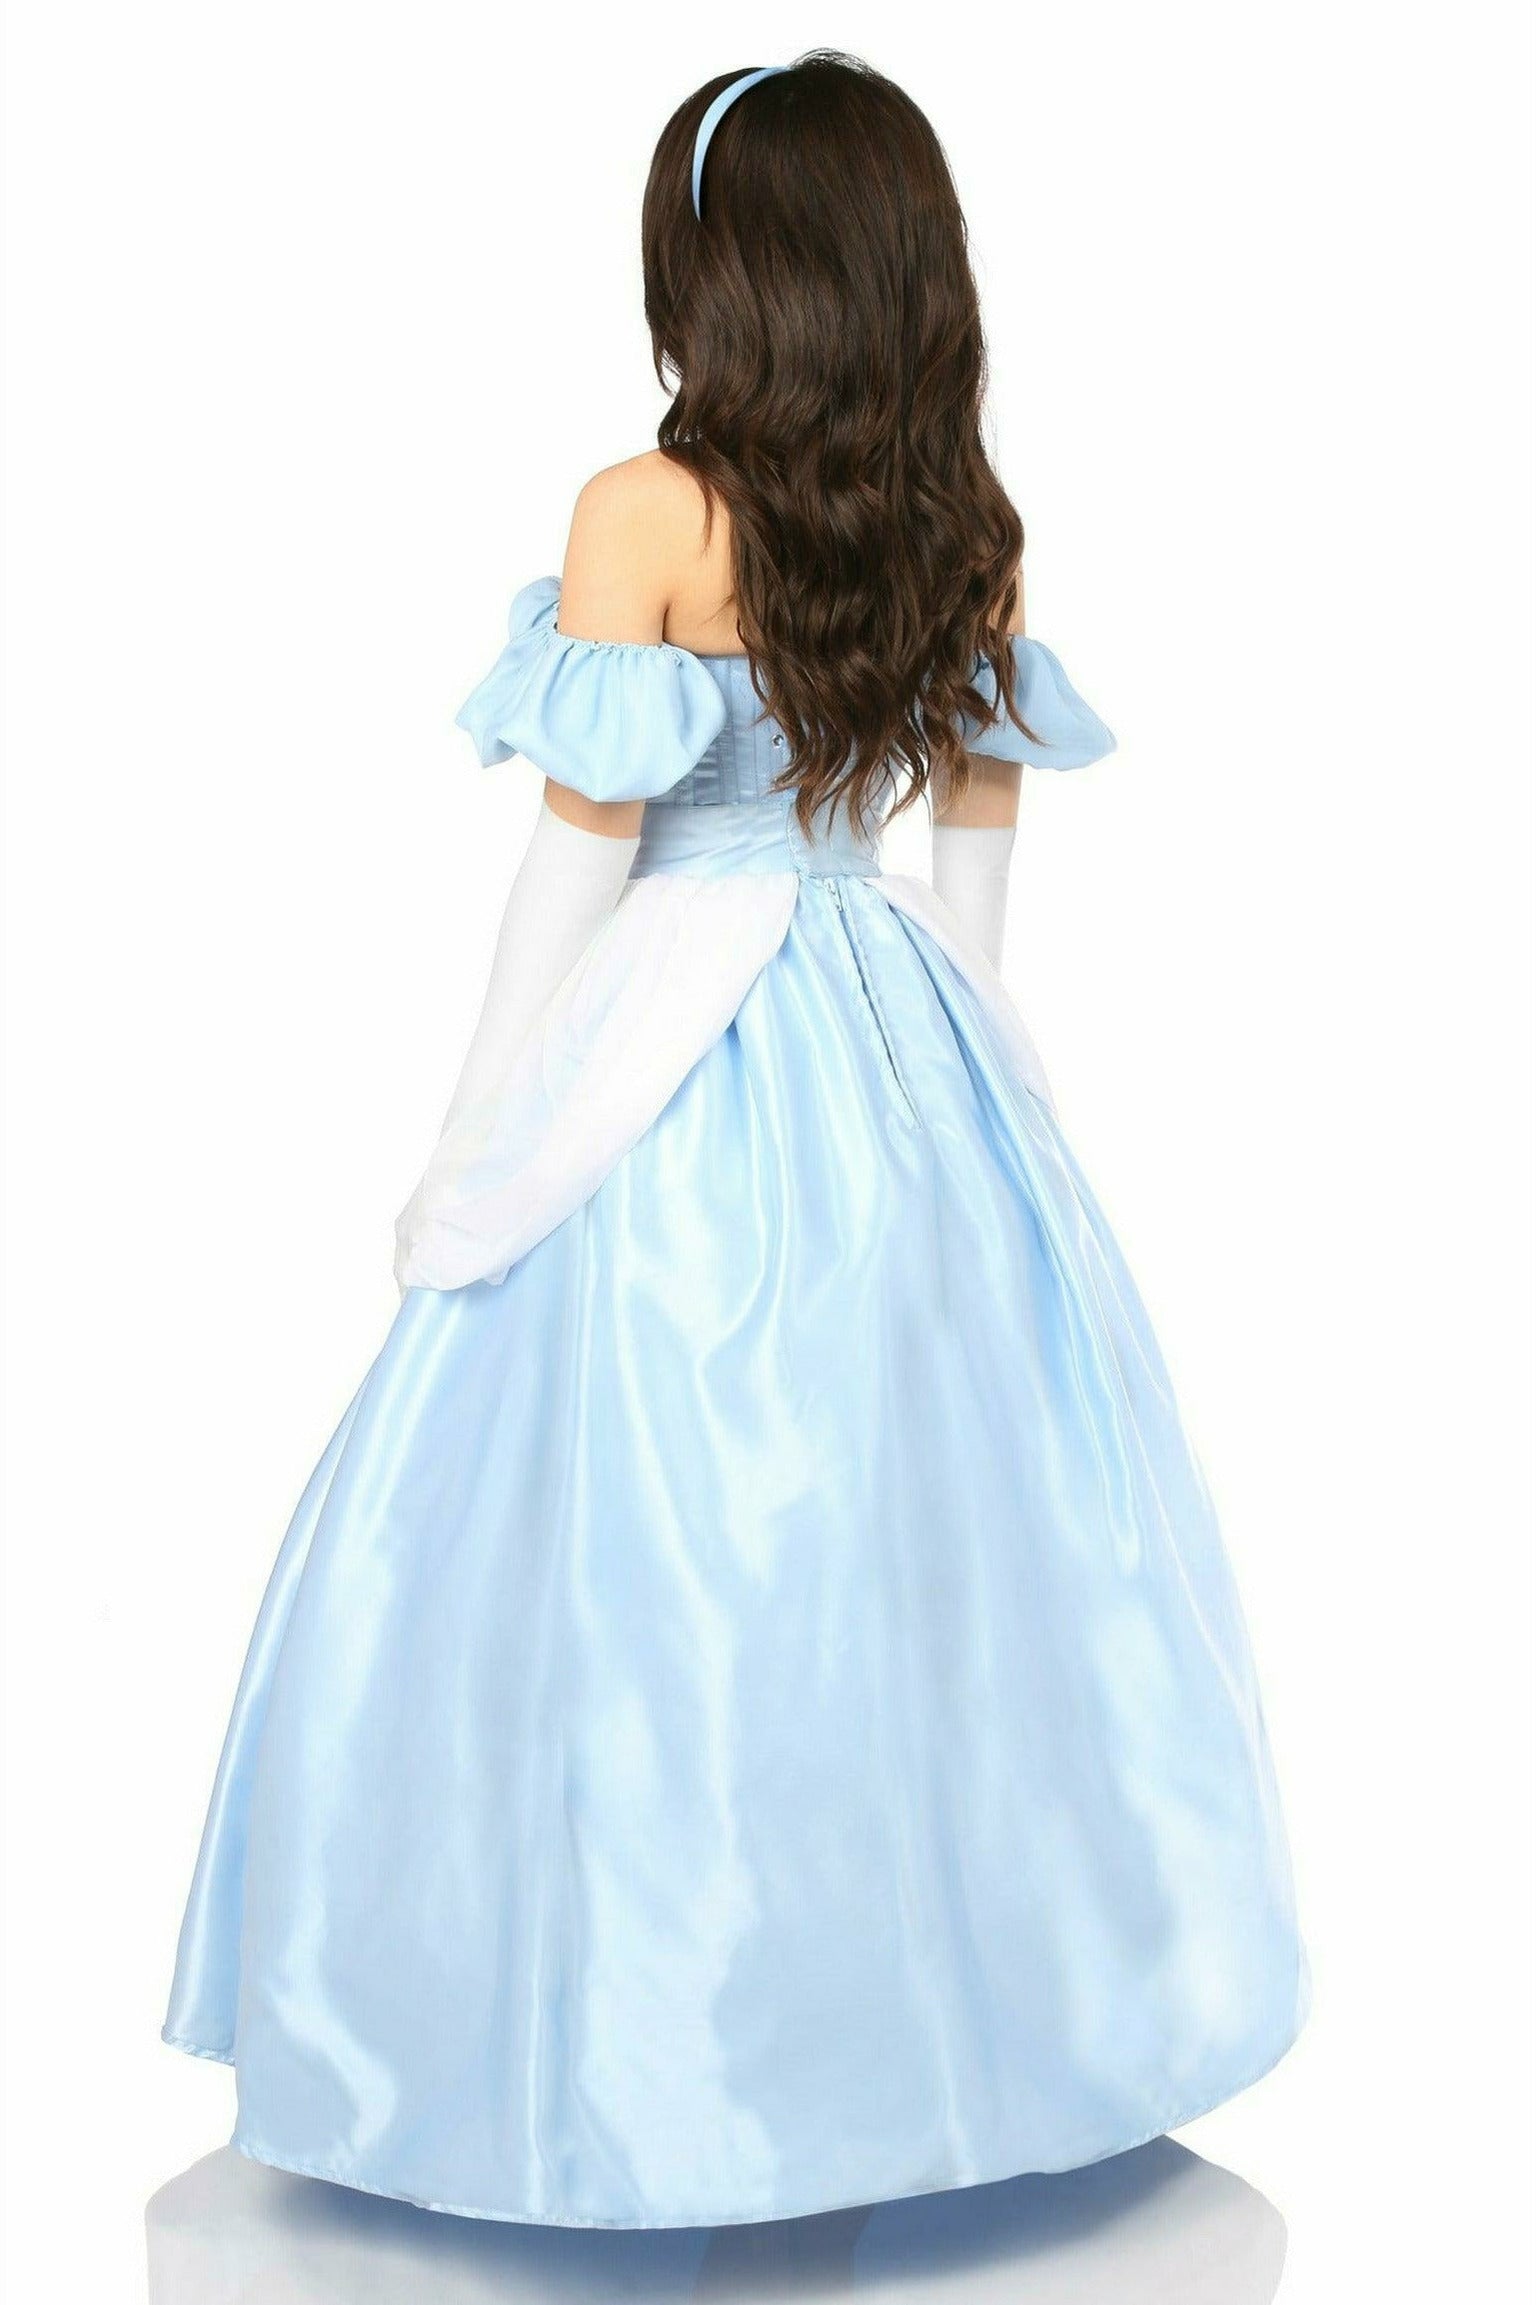 Daisy Corsets Top Drawer 6 PC Fairytale Princess Corset Costume